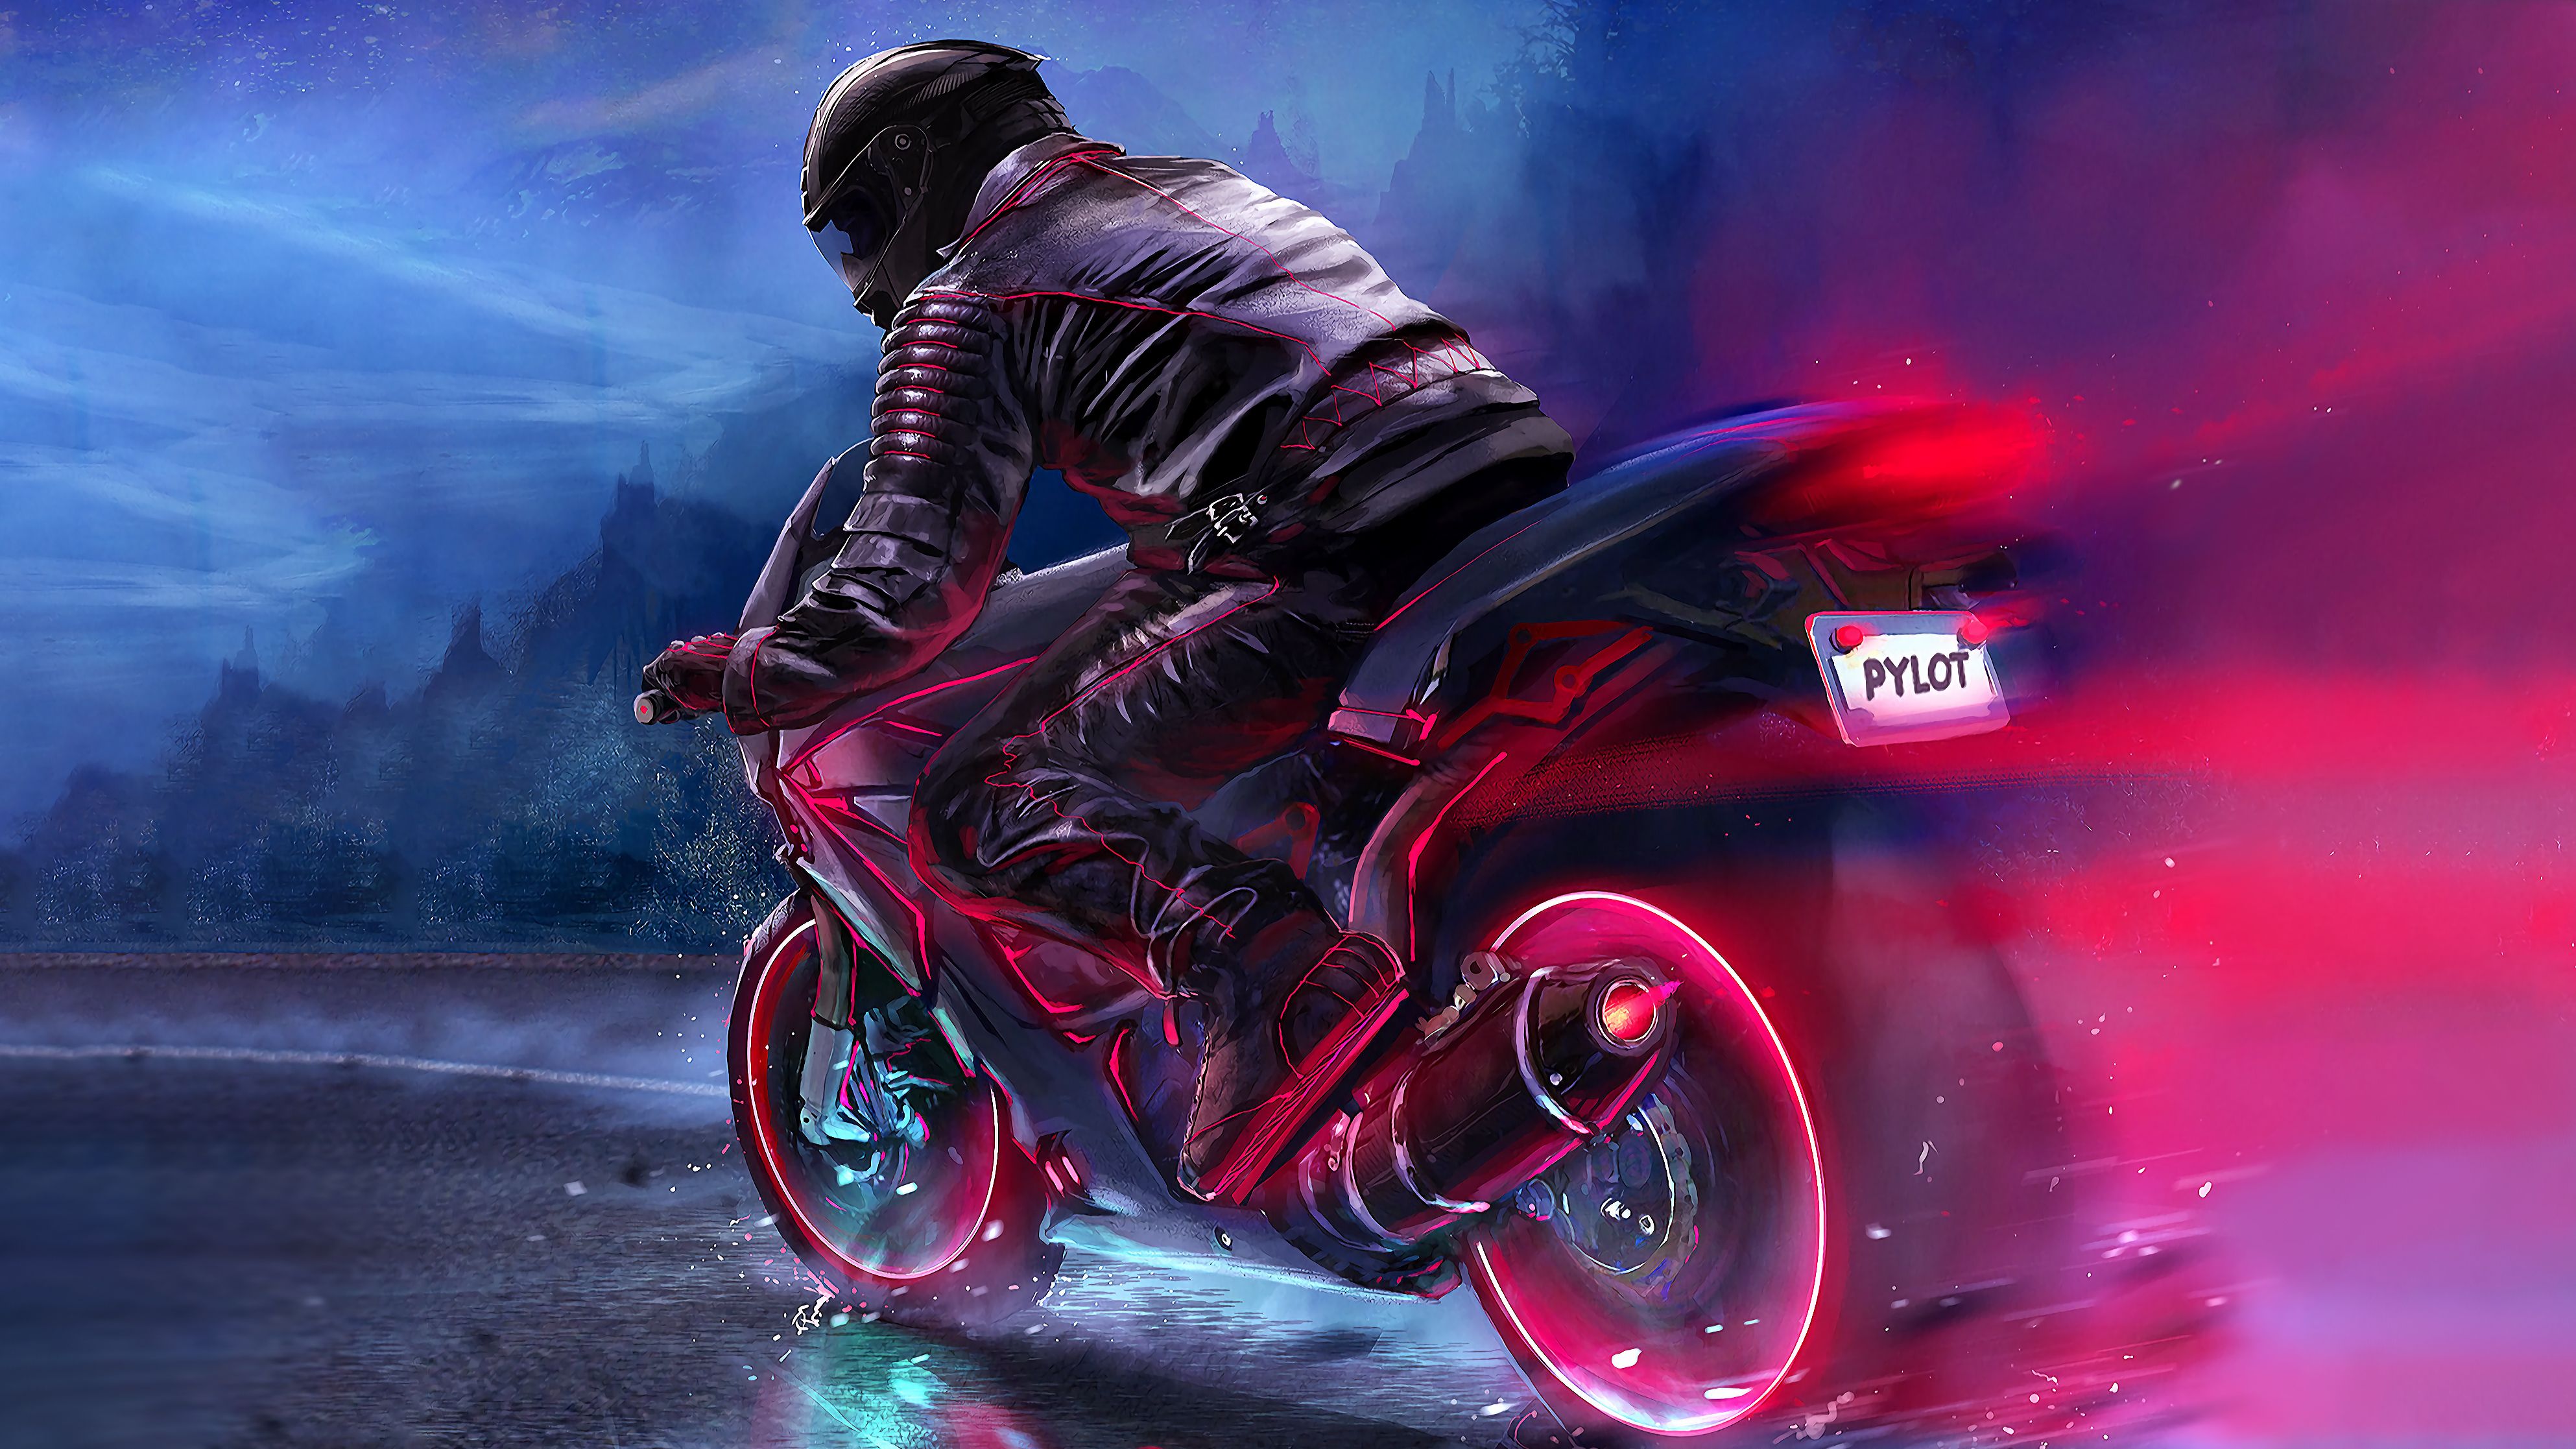 Retro Bike Rider 4k, HD Artist, 4k Wallpaper, Image, Background